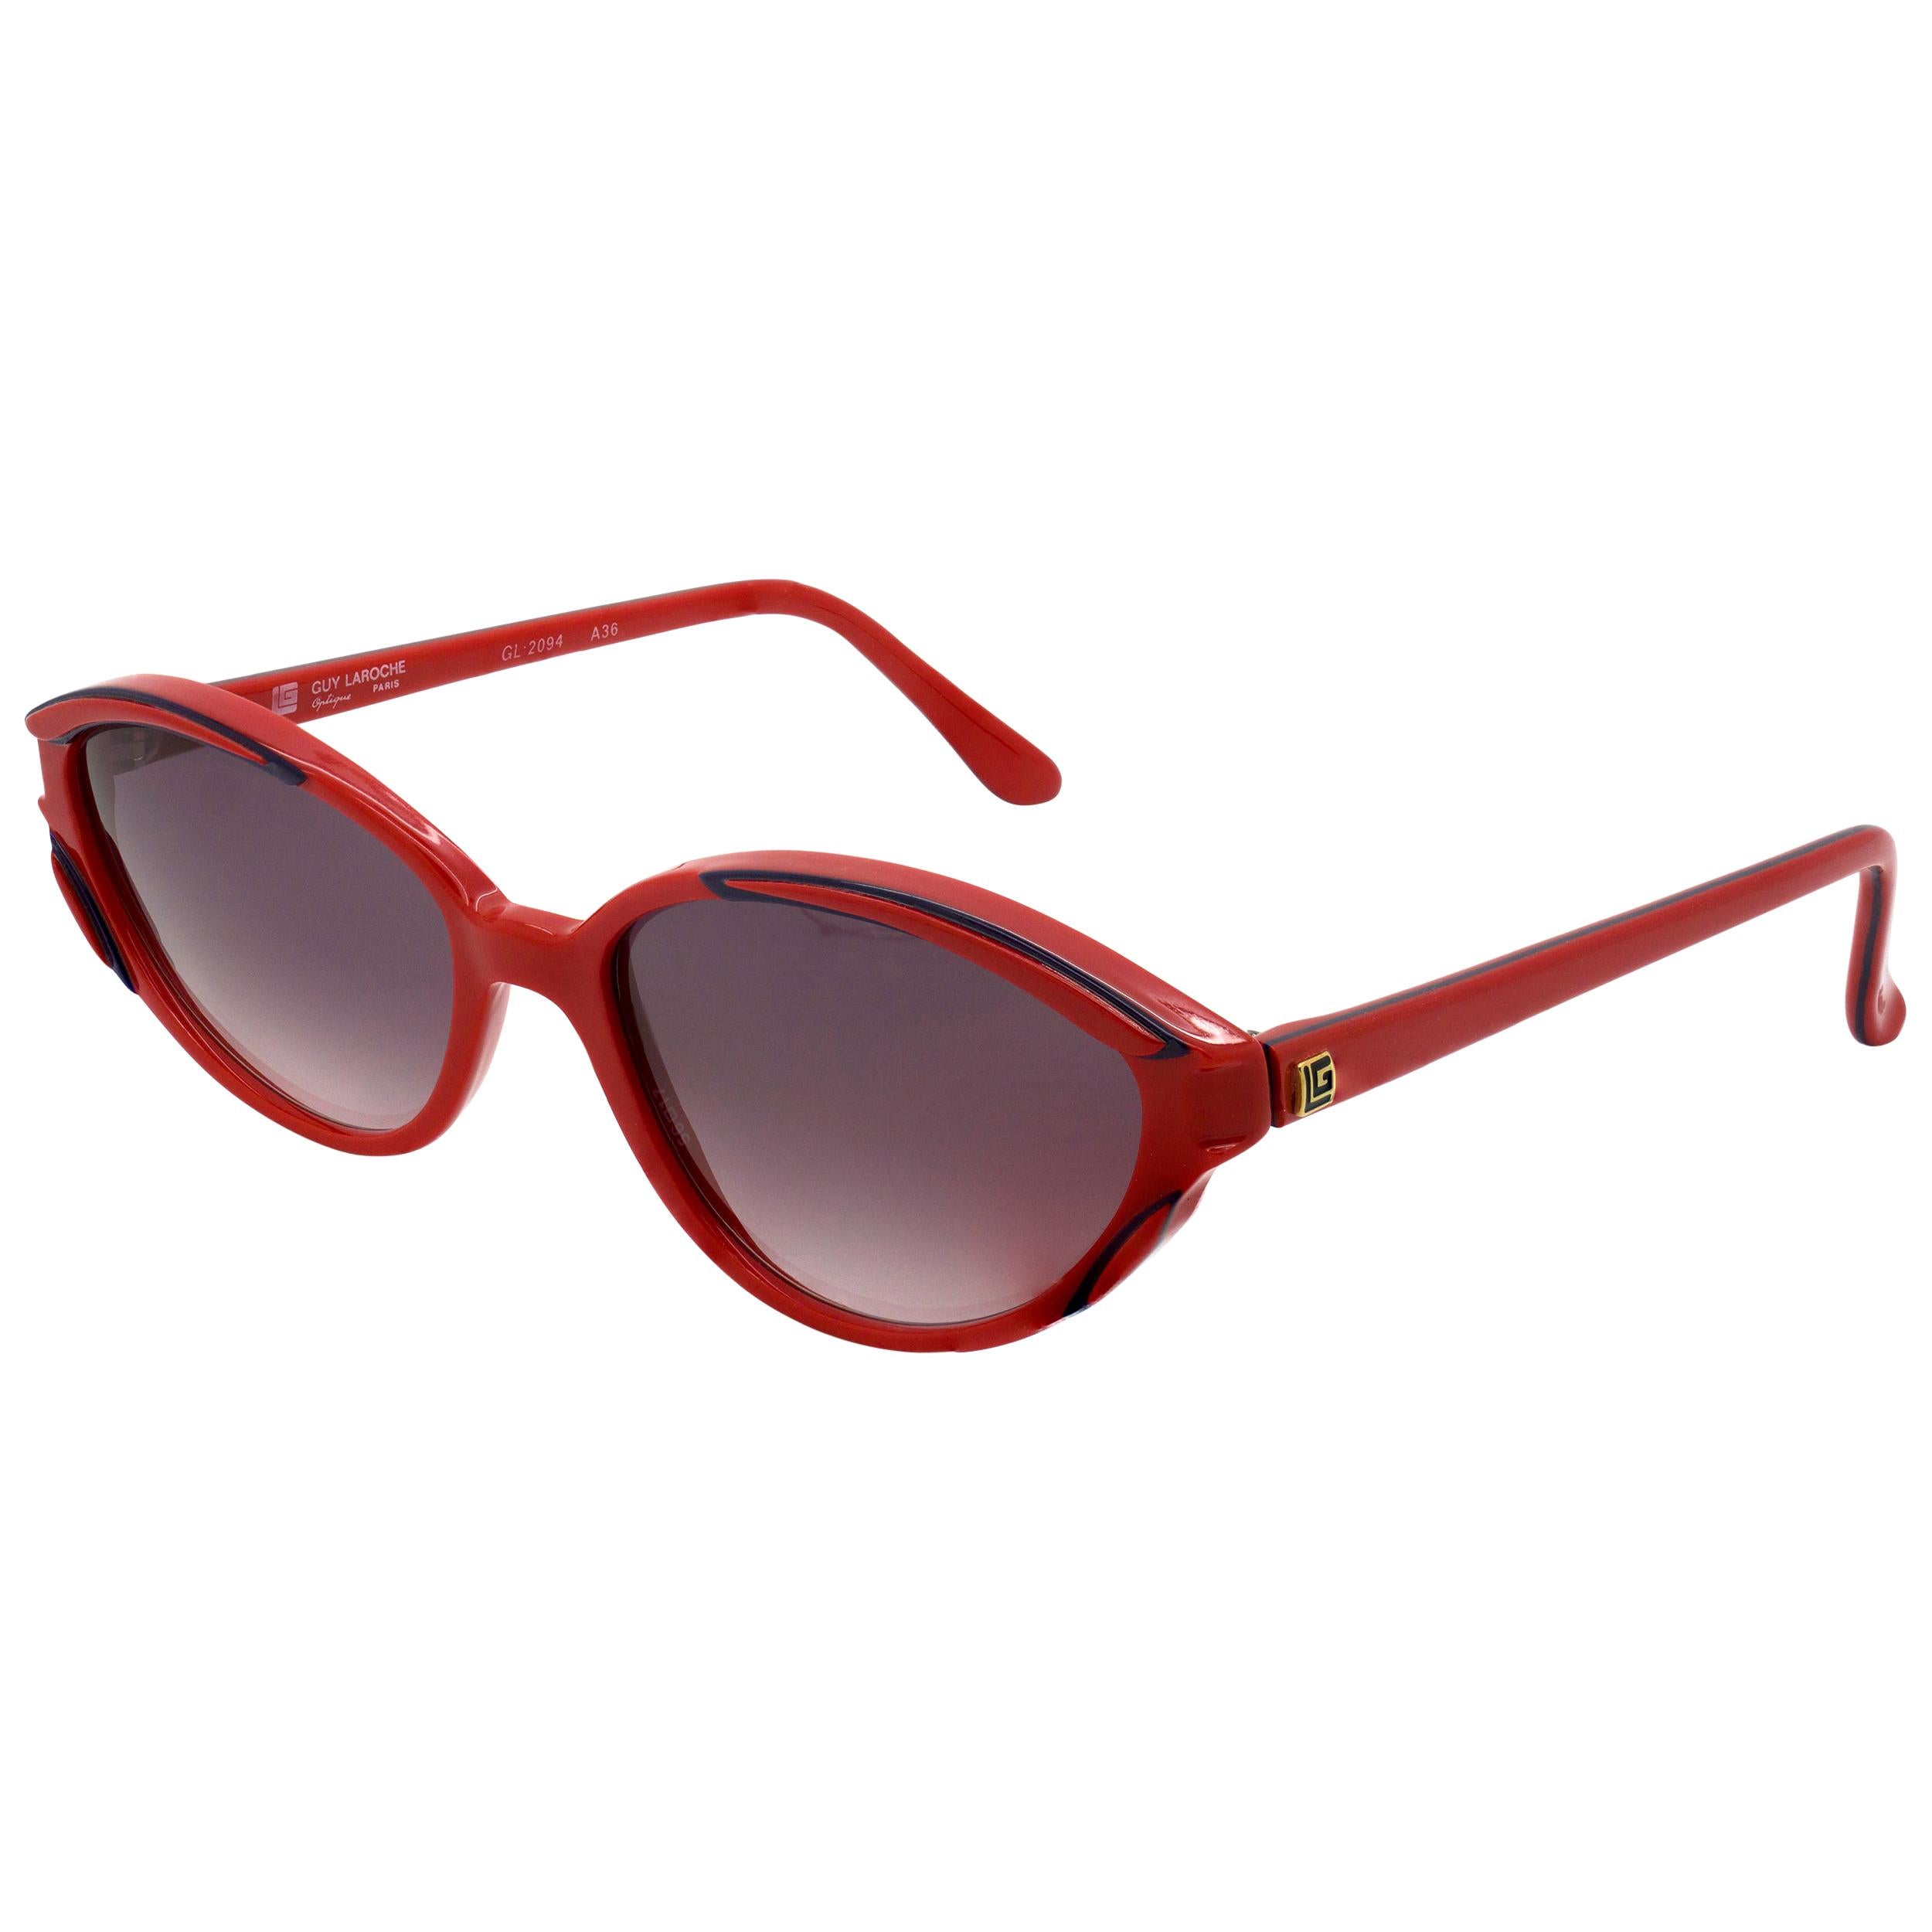 Guy Laroche red cat eye sunglasses For Sale